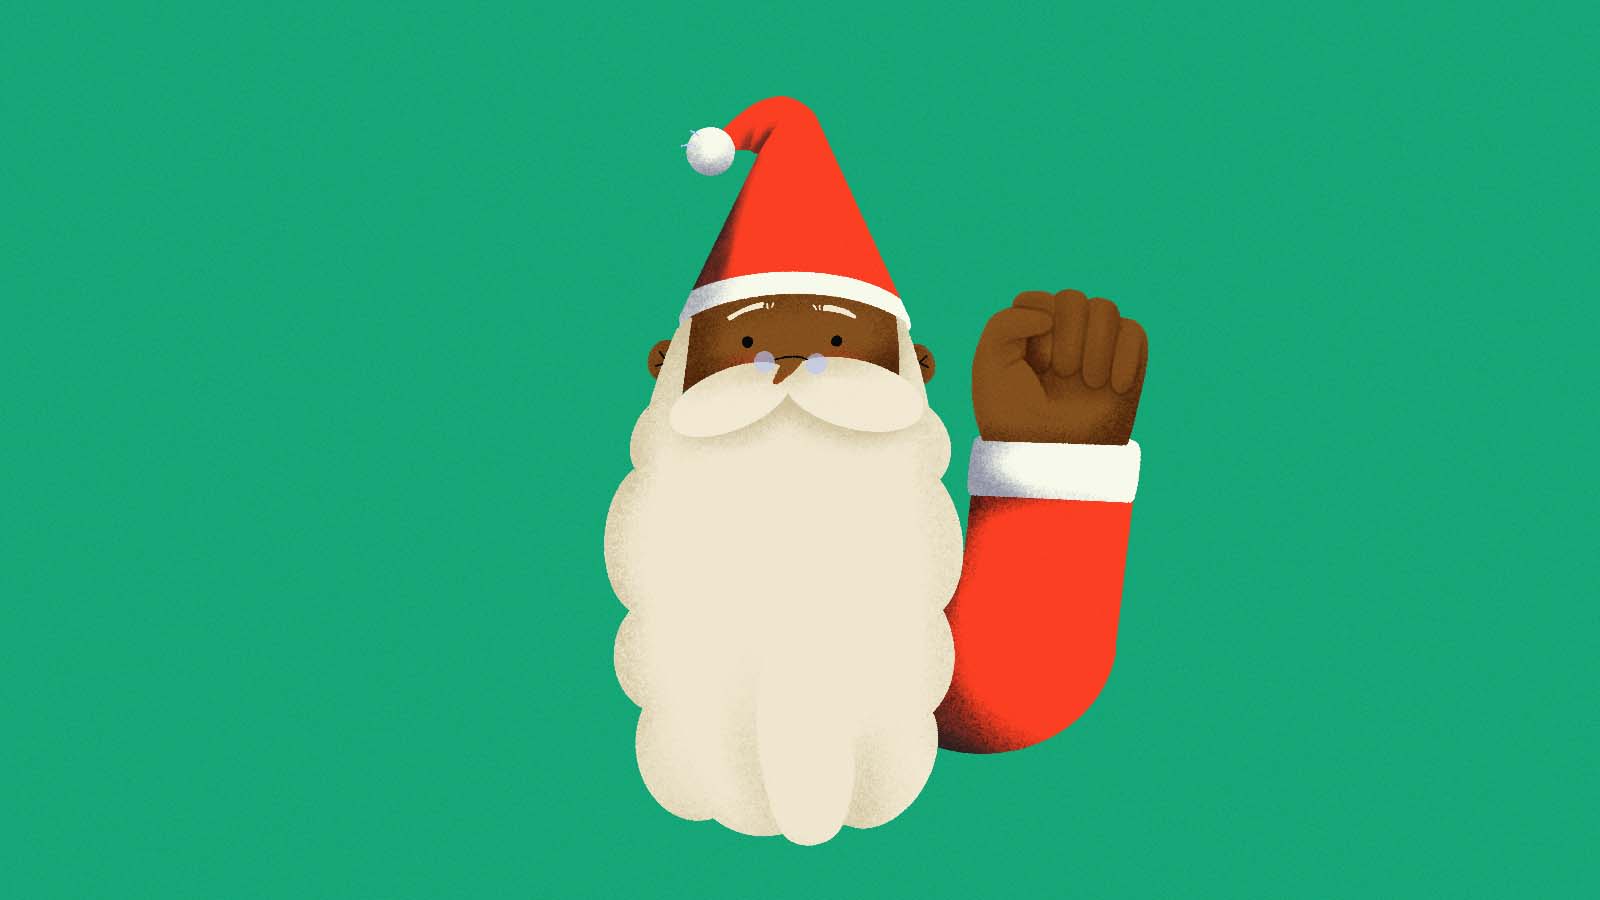 Diez aprobar derrocamiento You may be seeing a more 'woke' Santa Claus this Christmas | CNN